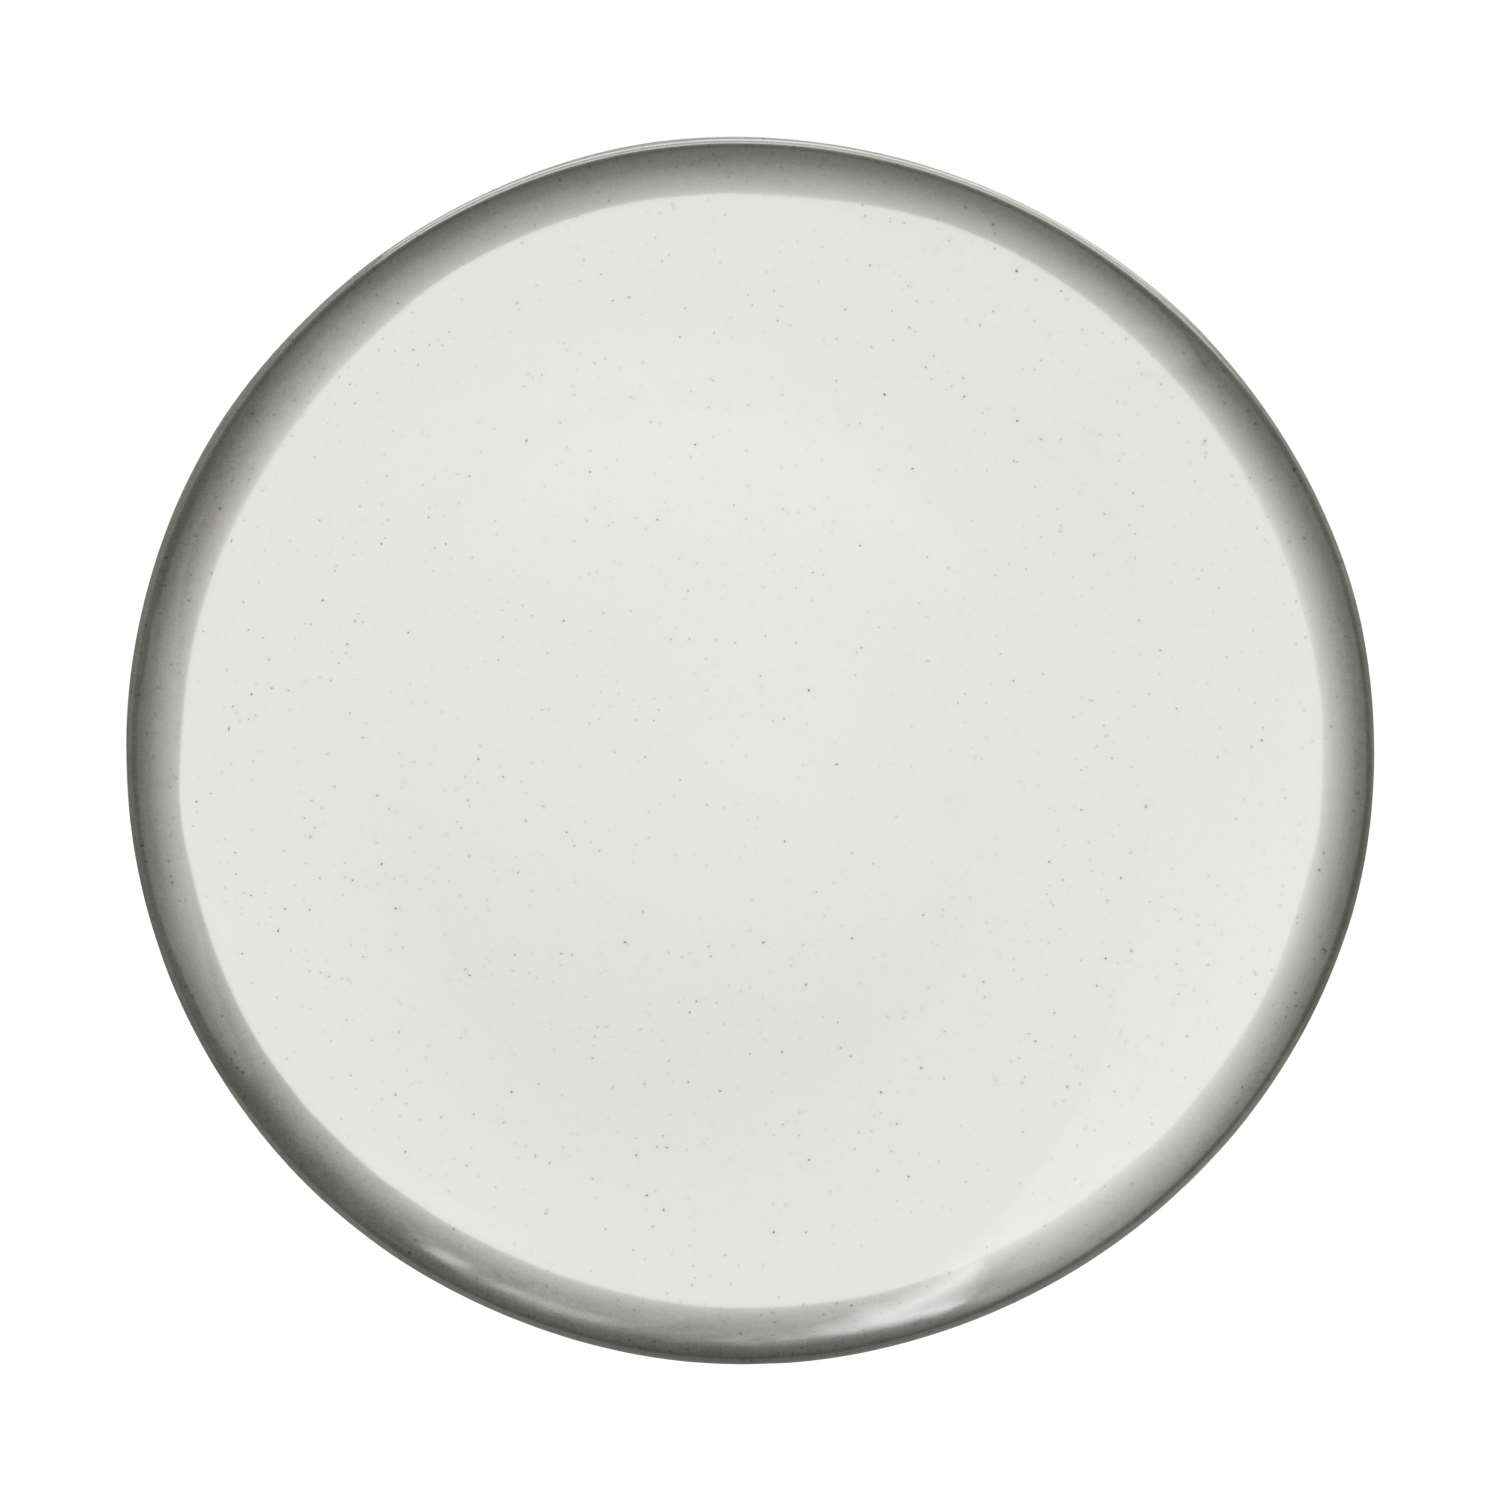 Dinewell Riva Cream Melamine Side Plate 7.5"